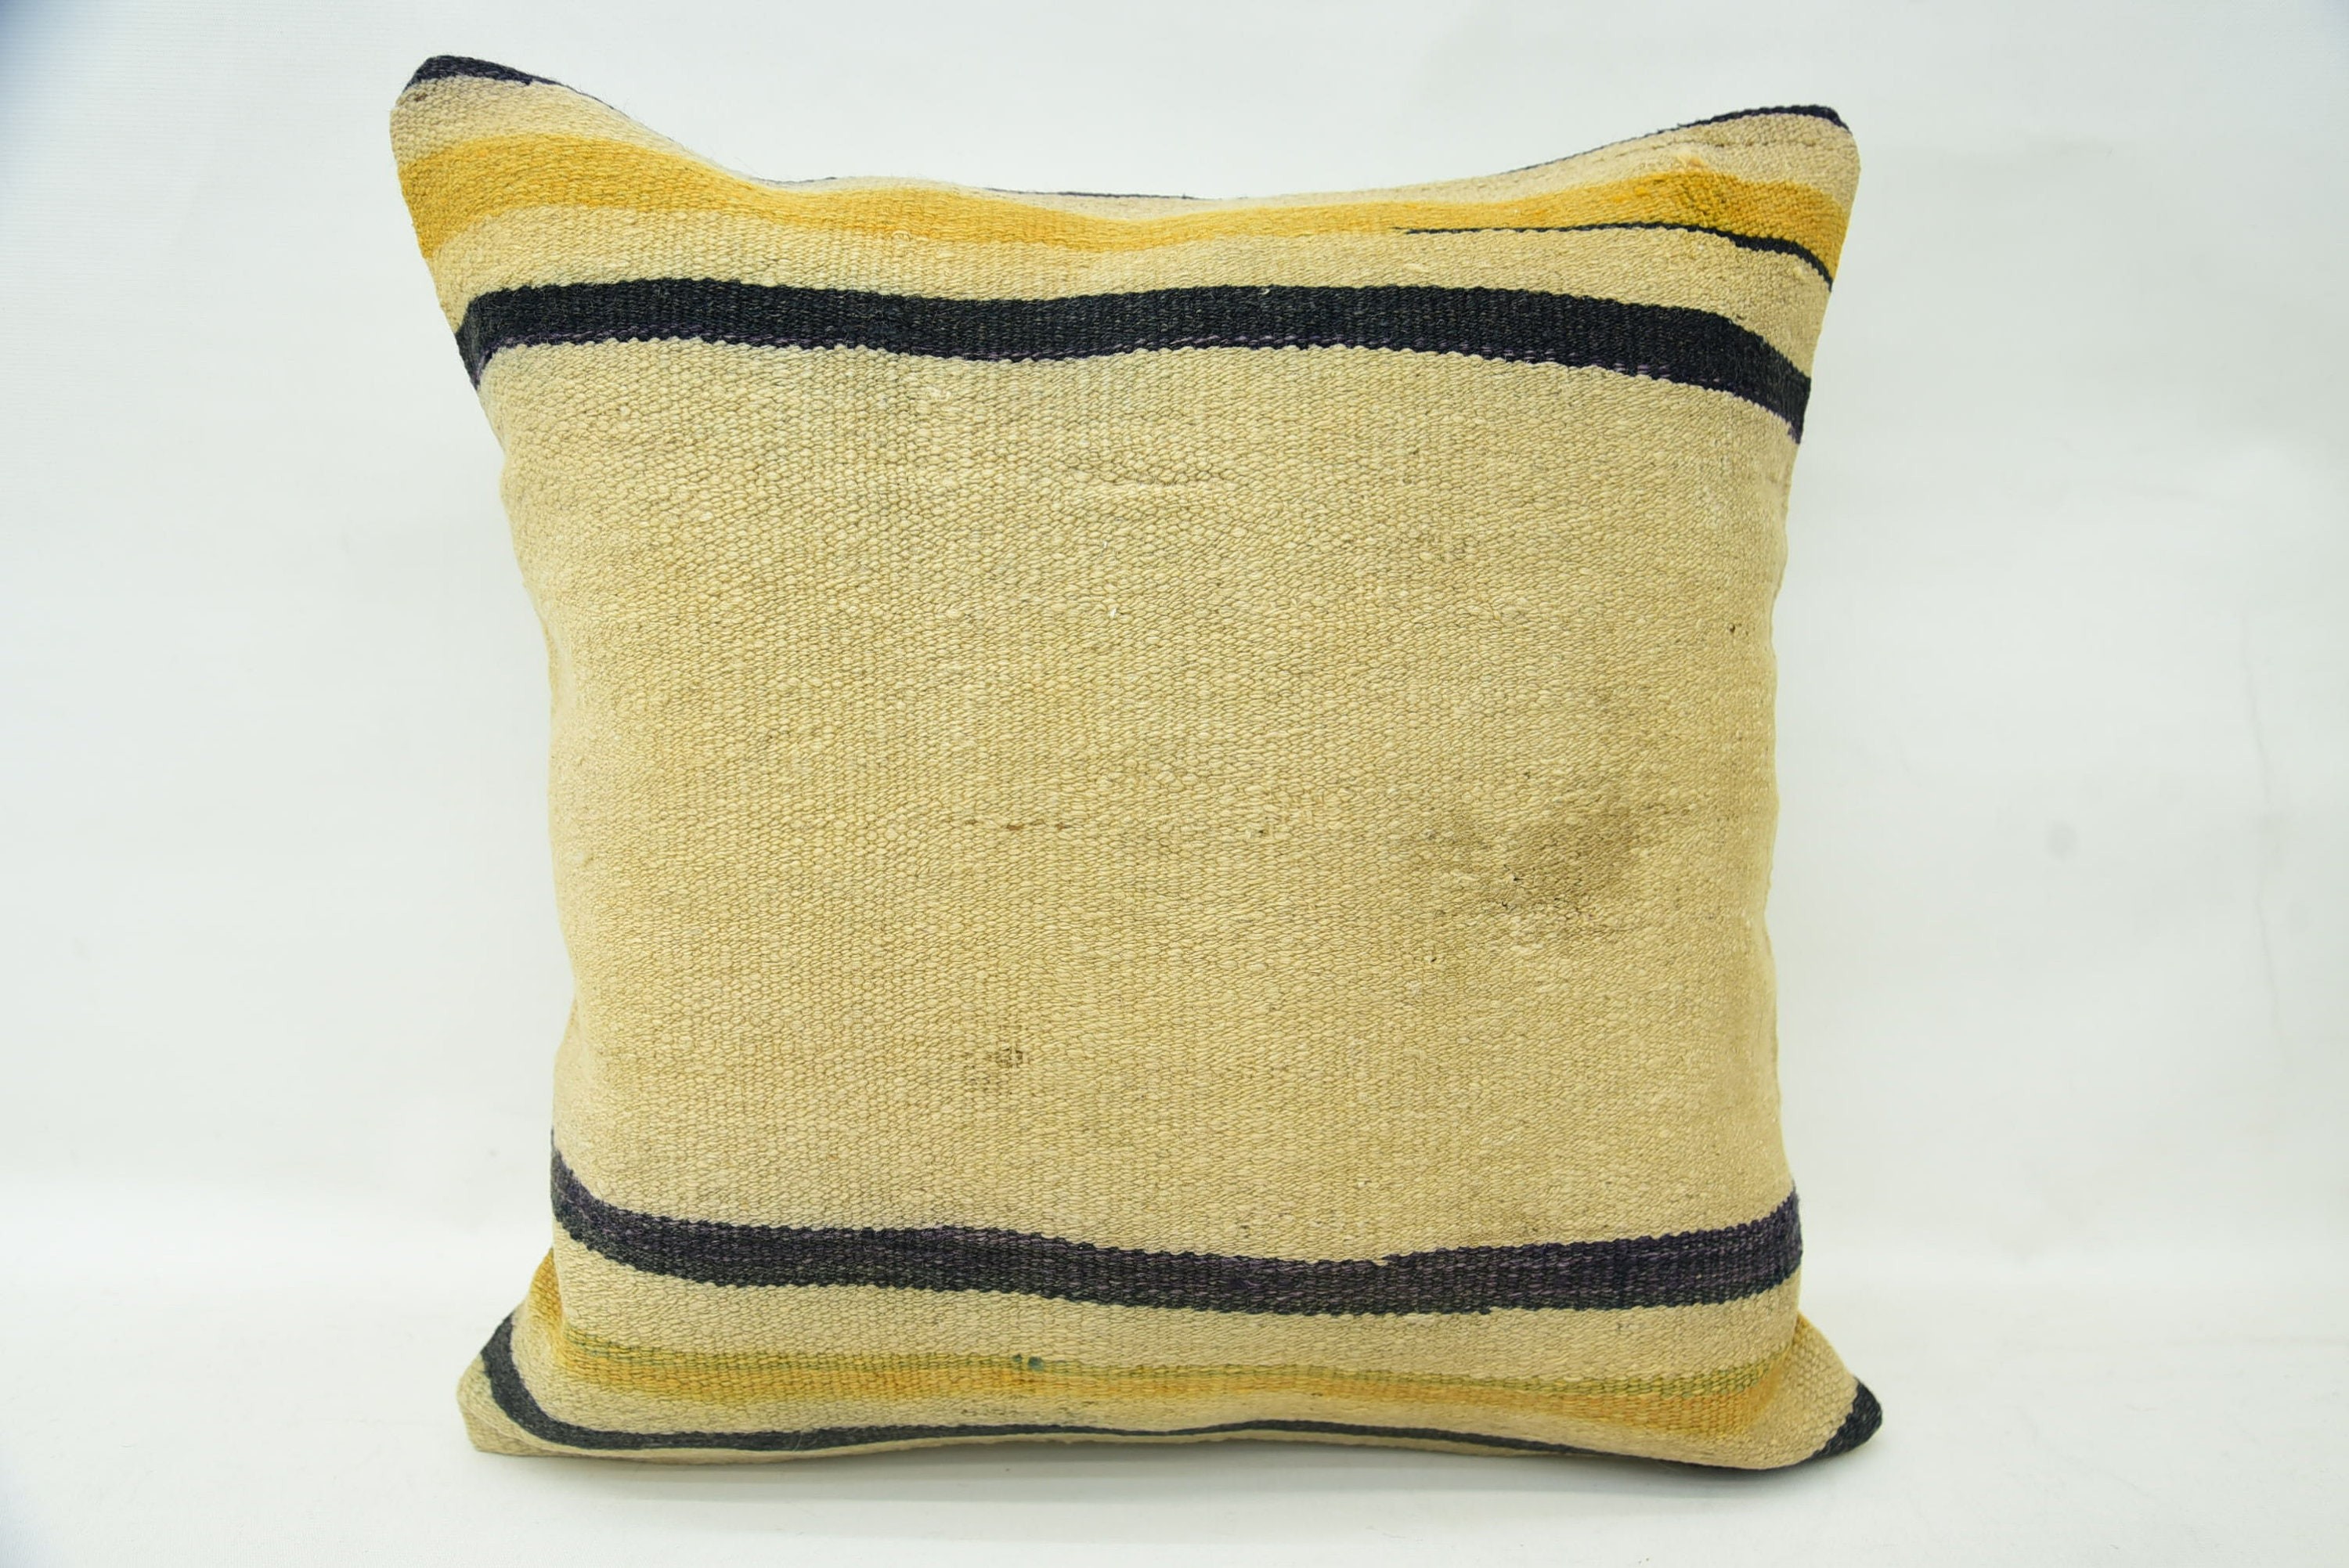 Handwoven Pillow Cover Cushion, Southwestern Pillow, 18"x18" Beige Pillow Sham, Throw Kilim Pillow, Boho Pillow, Ethnical Kilim Rug Pillow